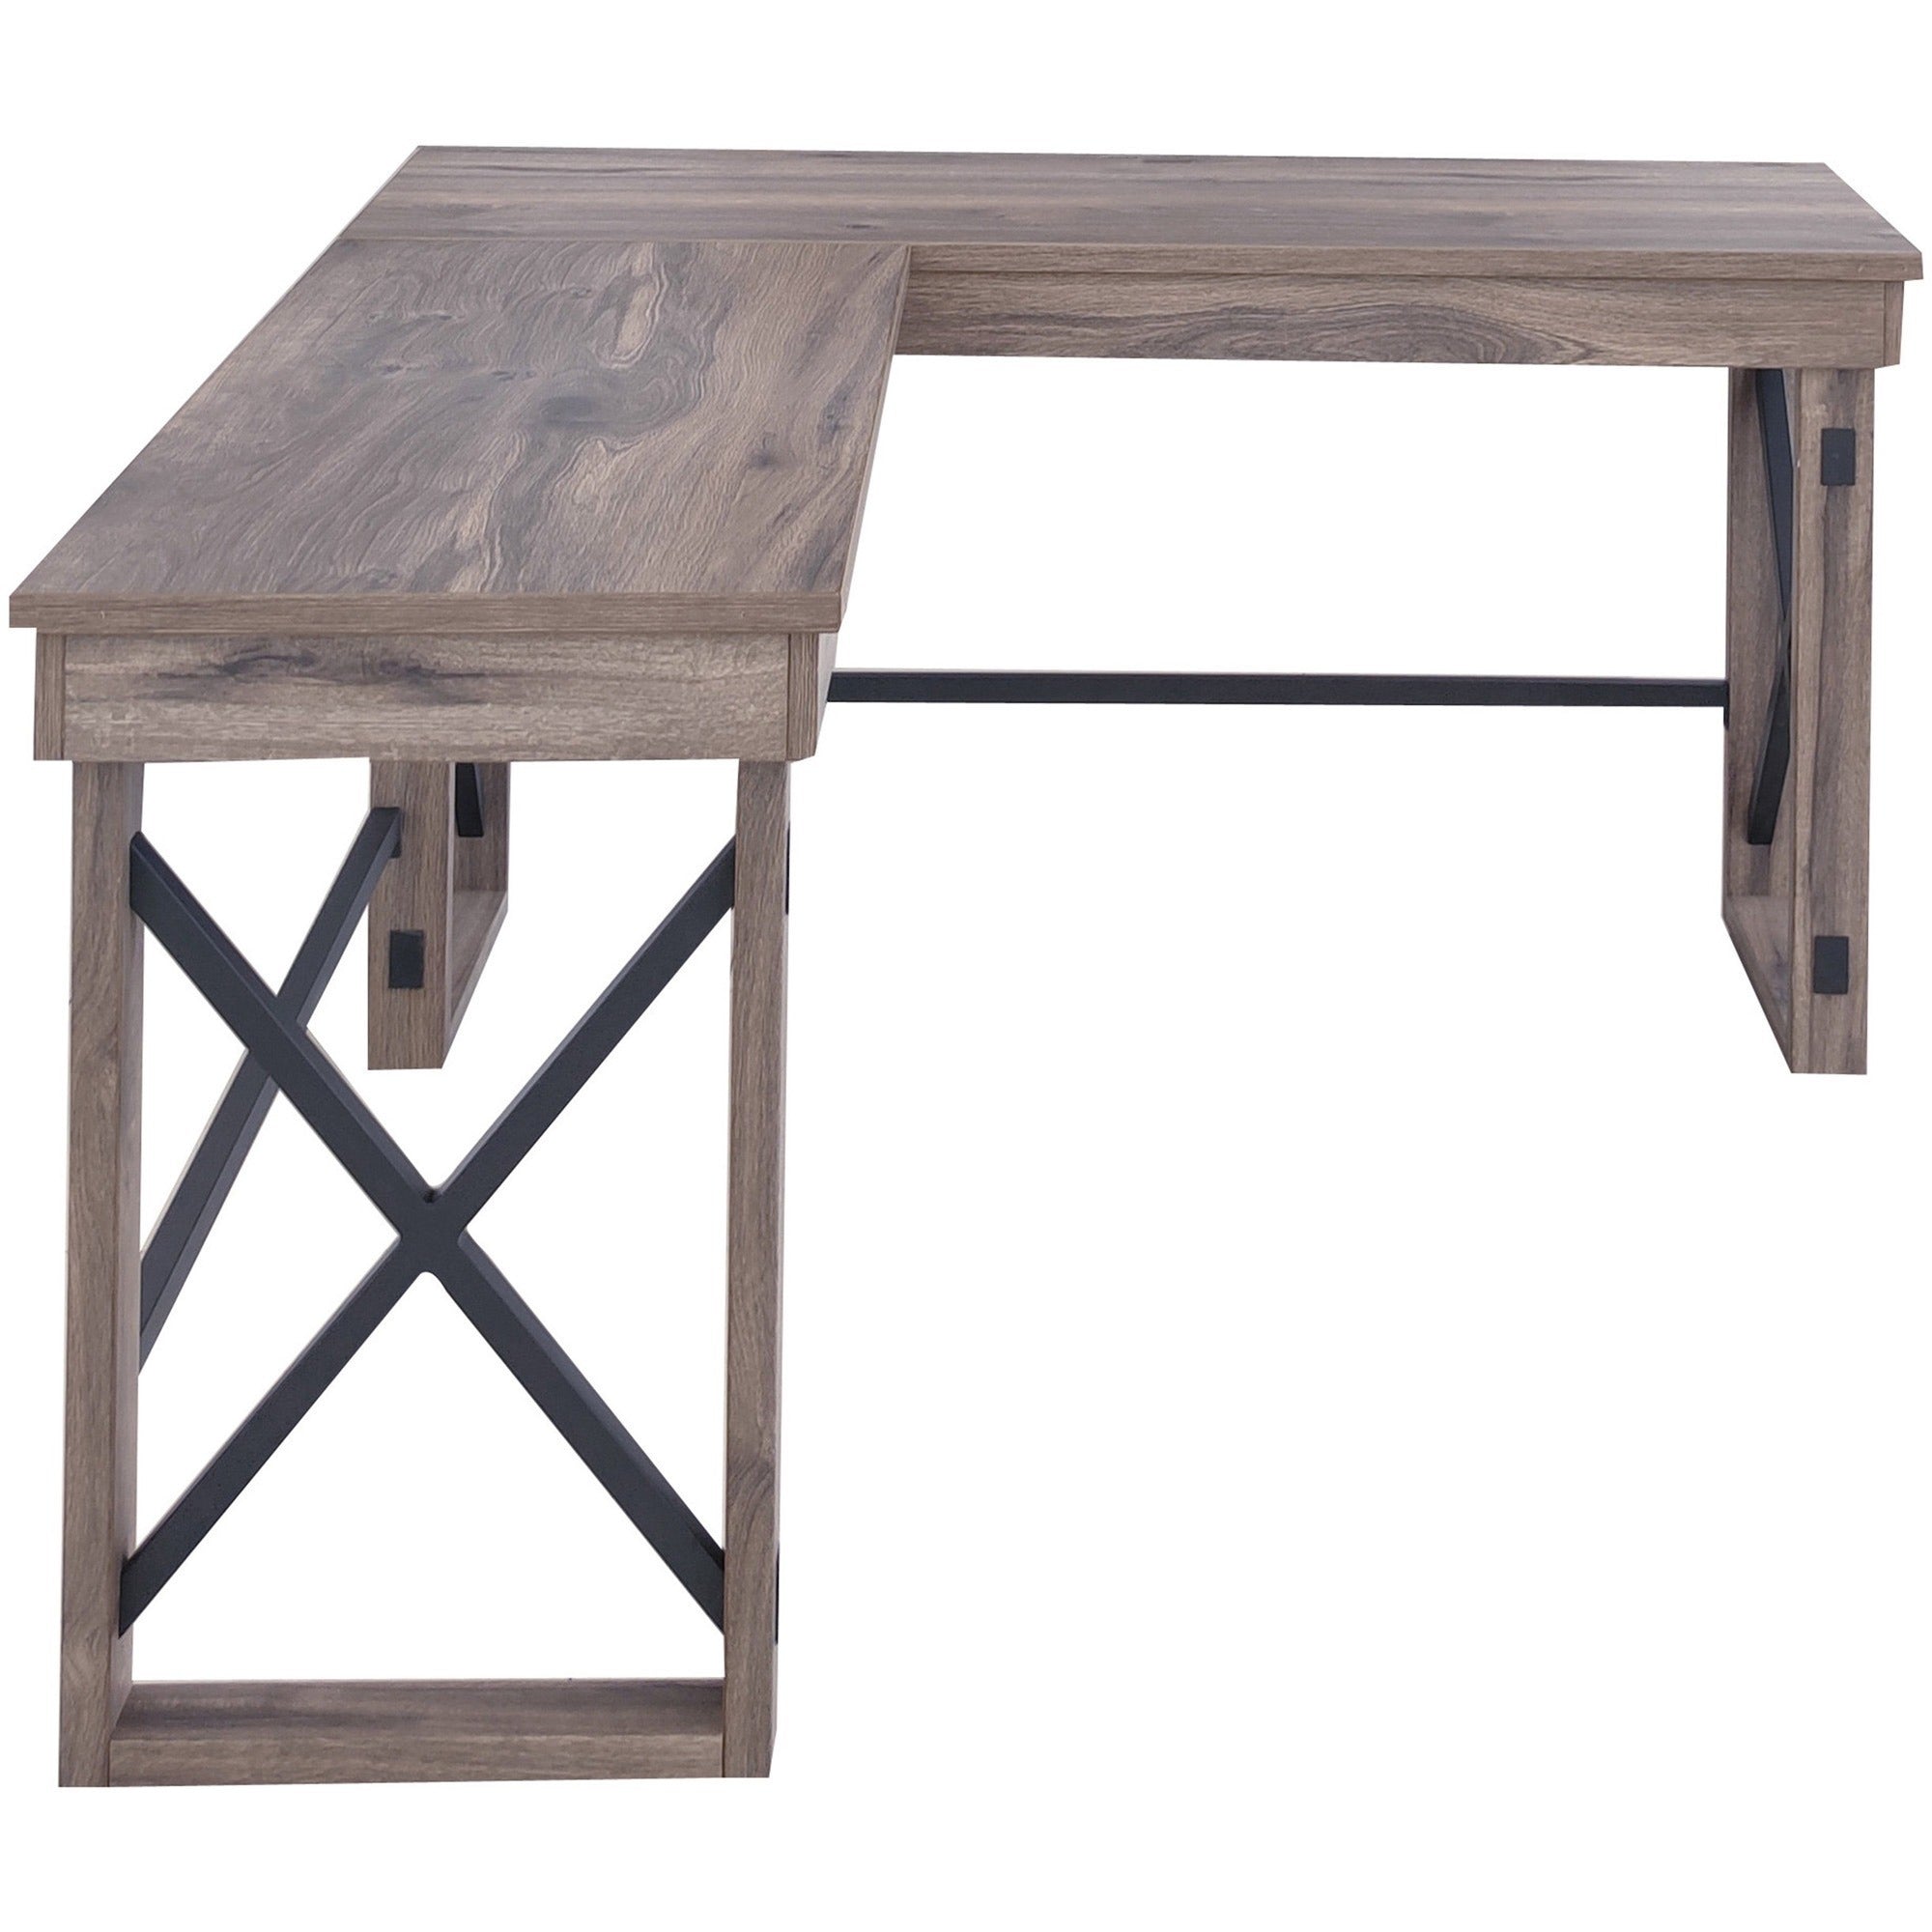 lys-l-shaped-industrial-desk-for-table-topl-shaped-top-200-lb-capacity-x-5213-table-top-width-x-1975-table-top-depth-2950-height-assembly-required-aged-oak-medium-density-fiberboard-mdf-1-each_lysdk100lrgk - 2